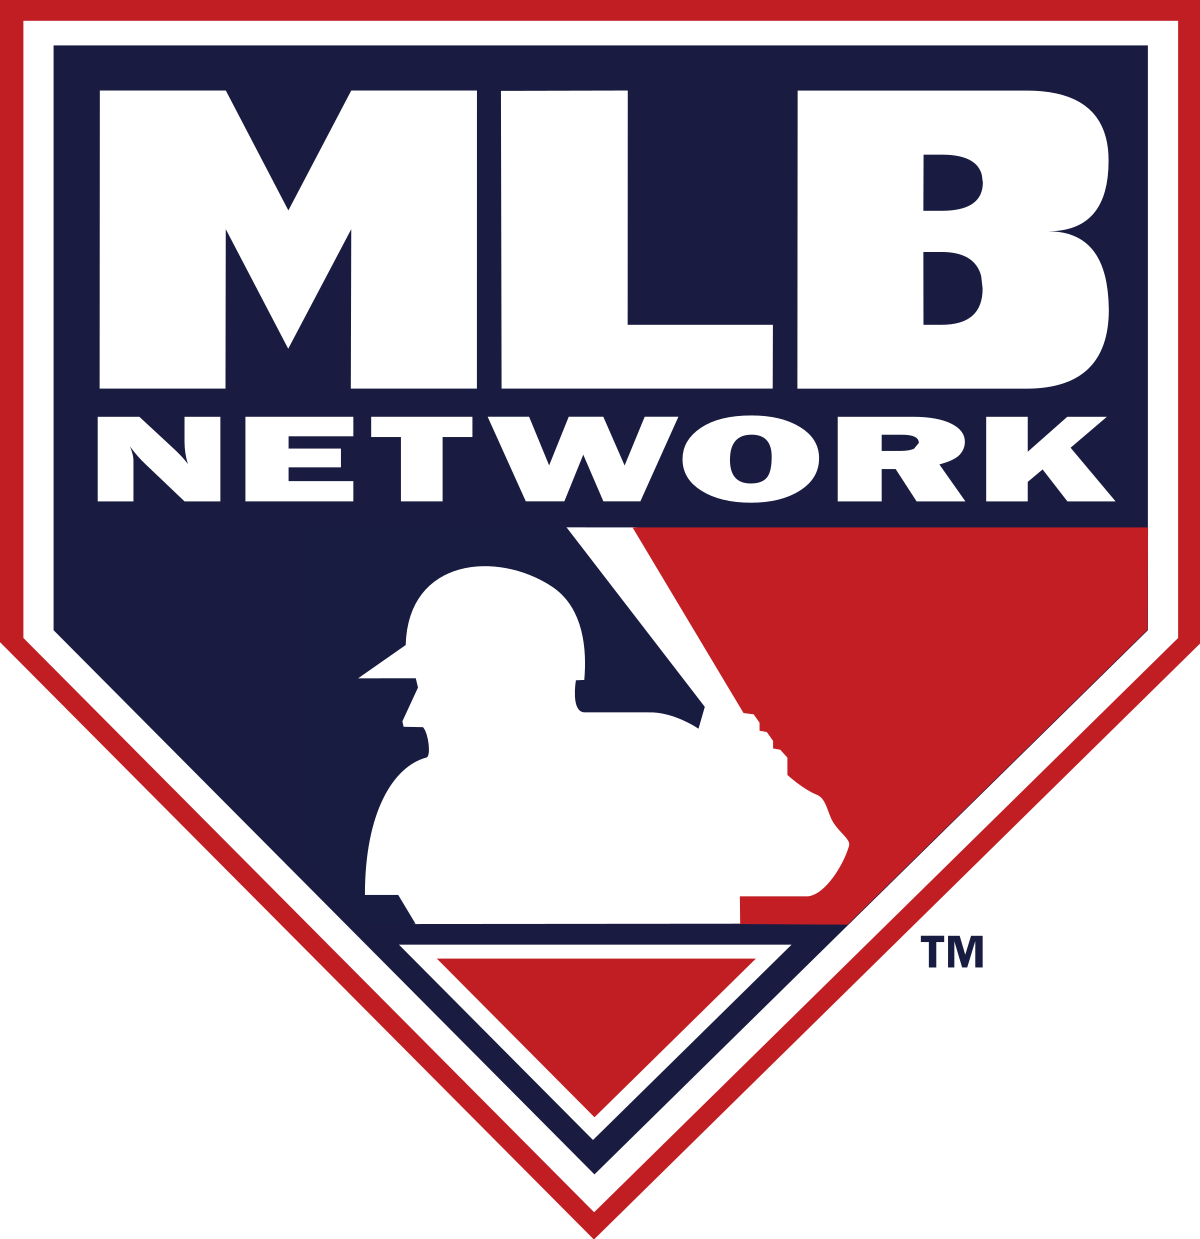 Results image of baseball network logo